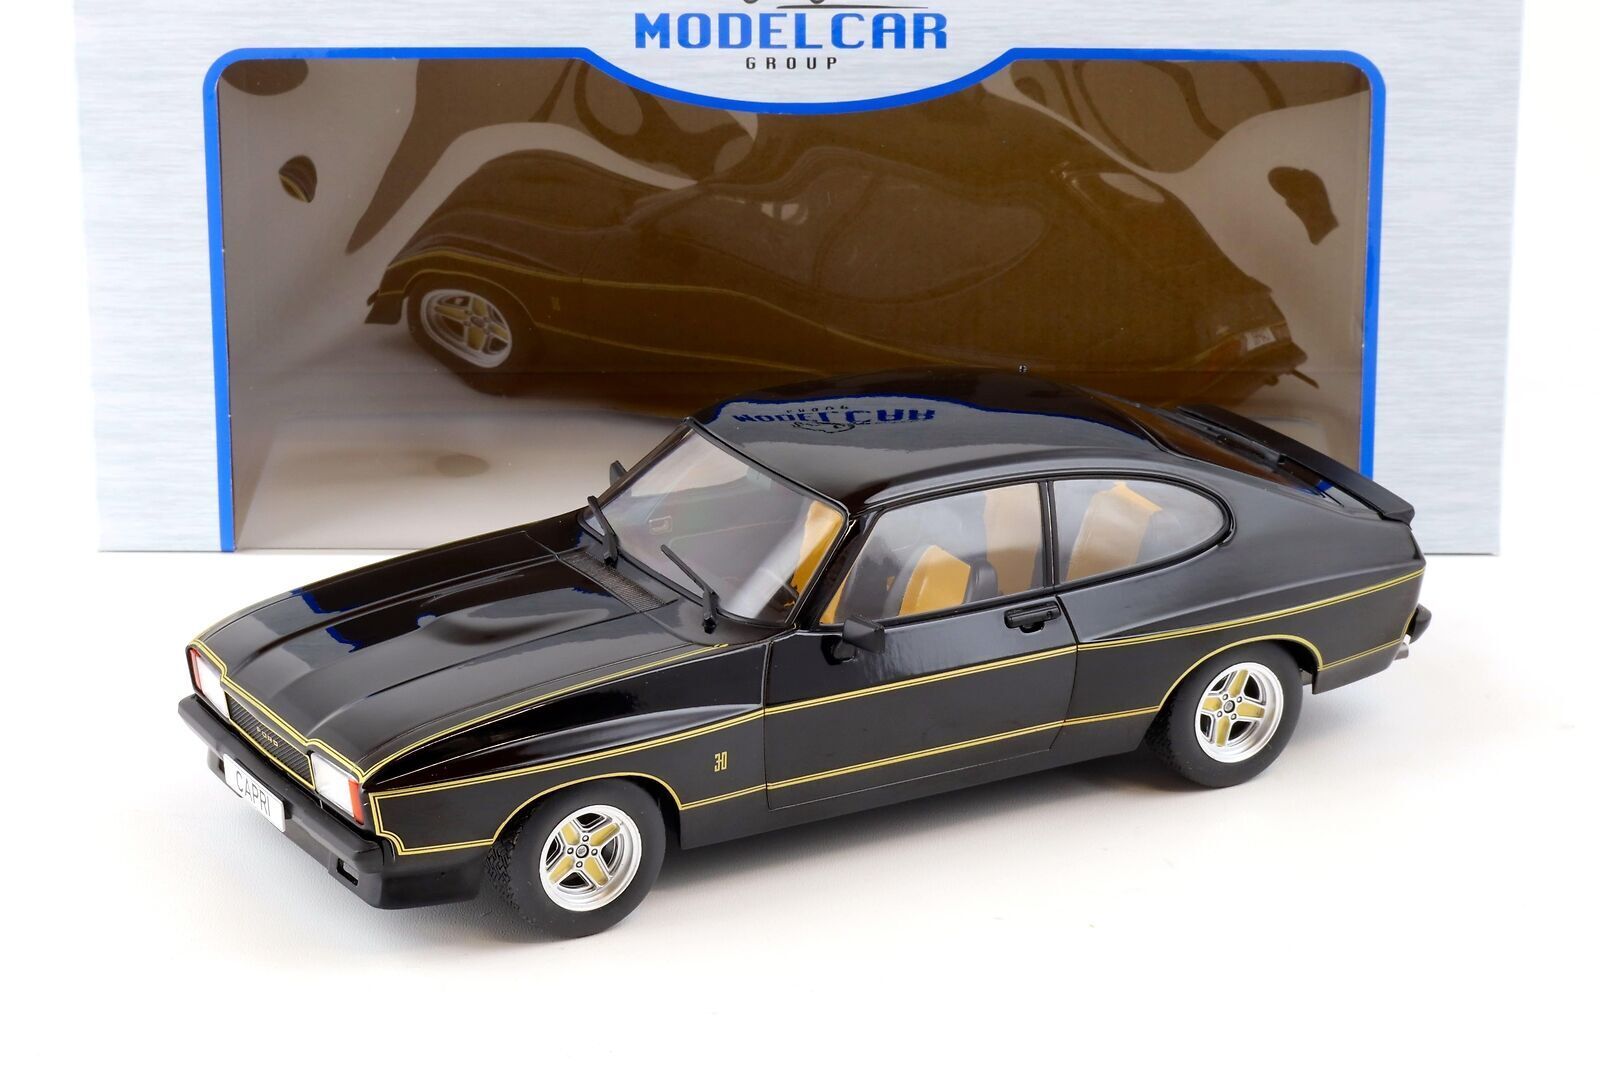 ModelCar Ford Capri MK II X-Pack 1975 Black Gold Scale 1:18